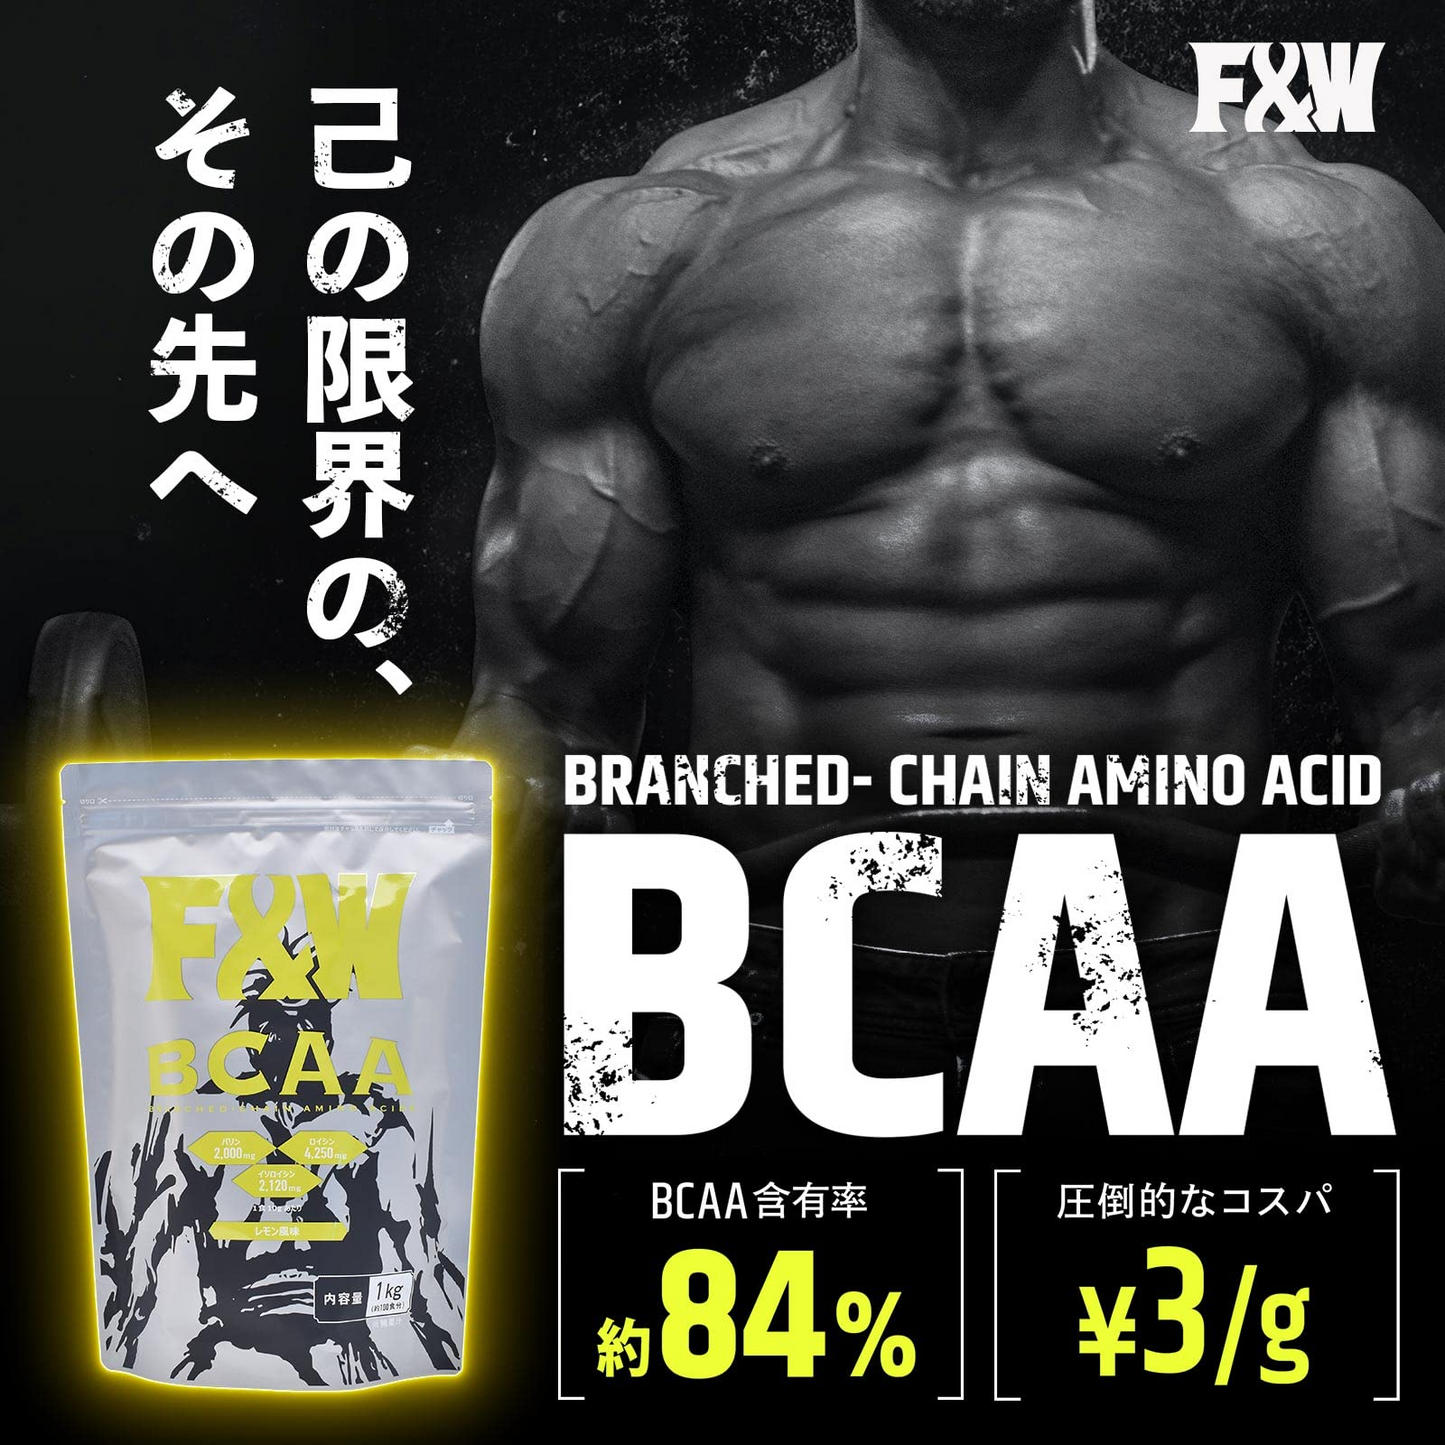 BCAA レモン風味 1kg